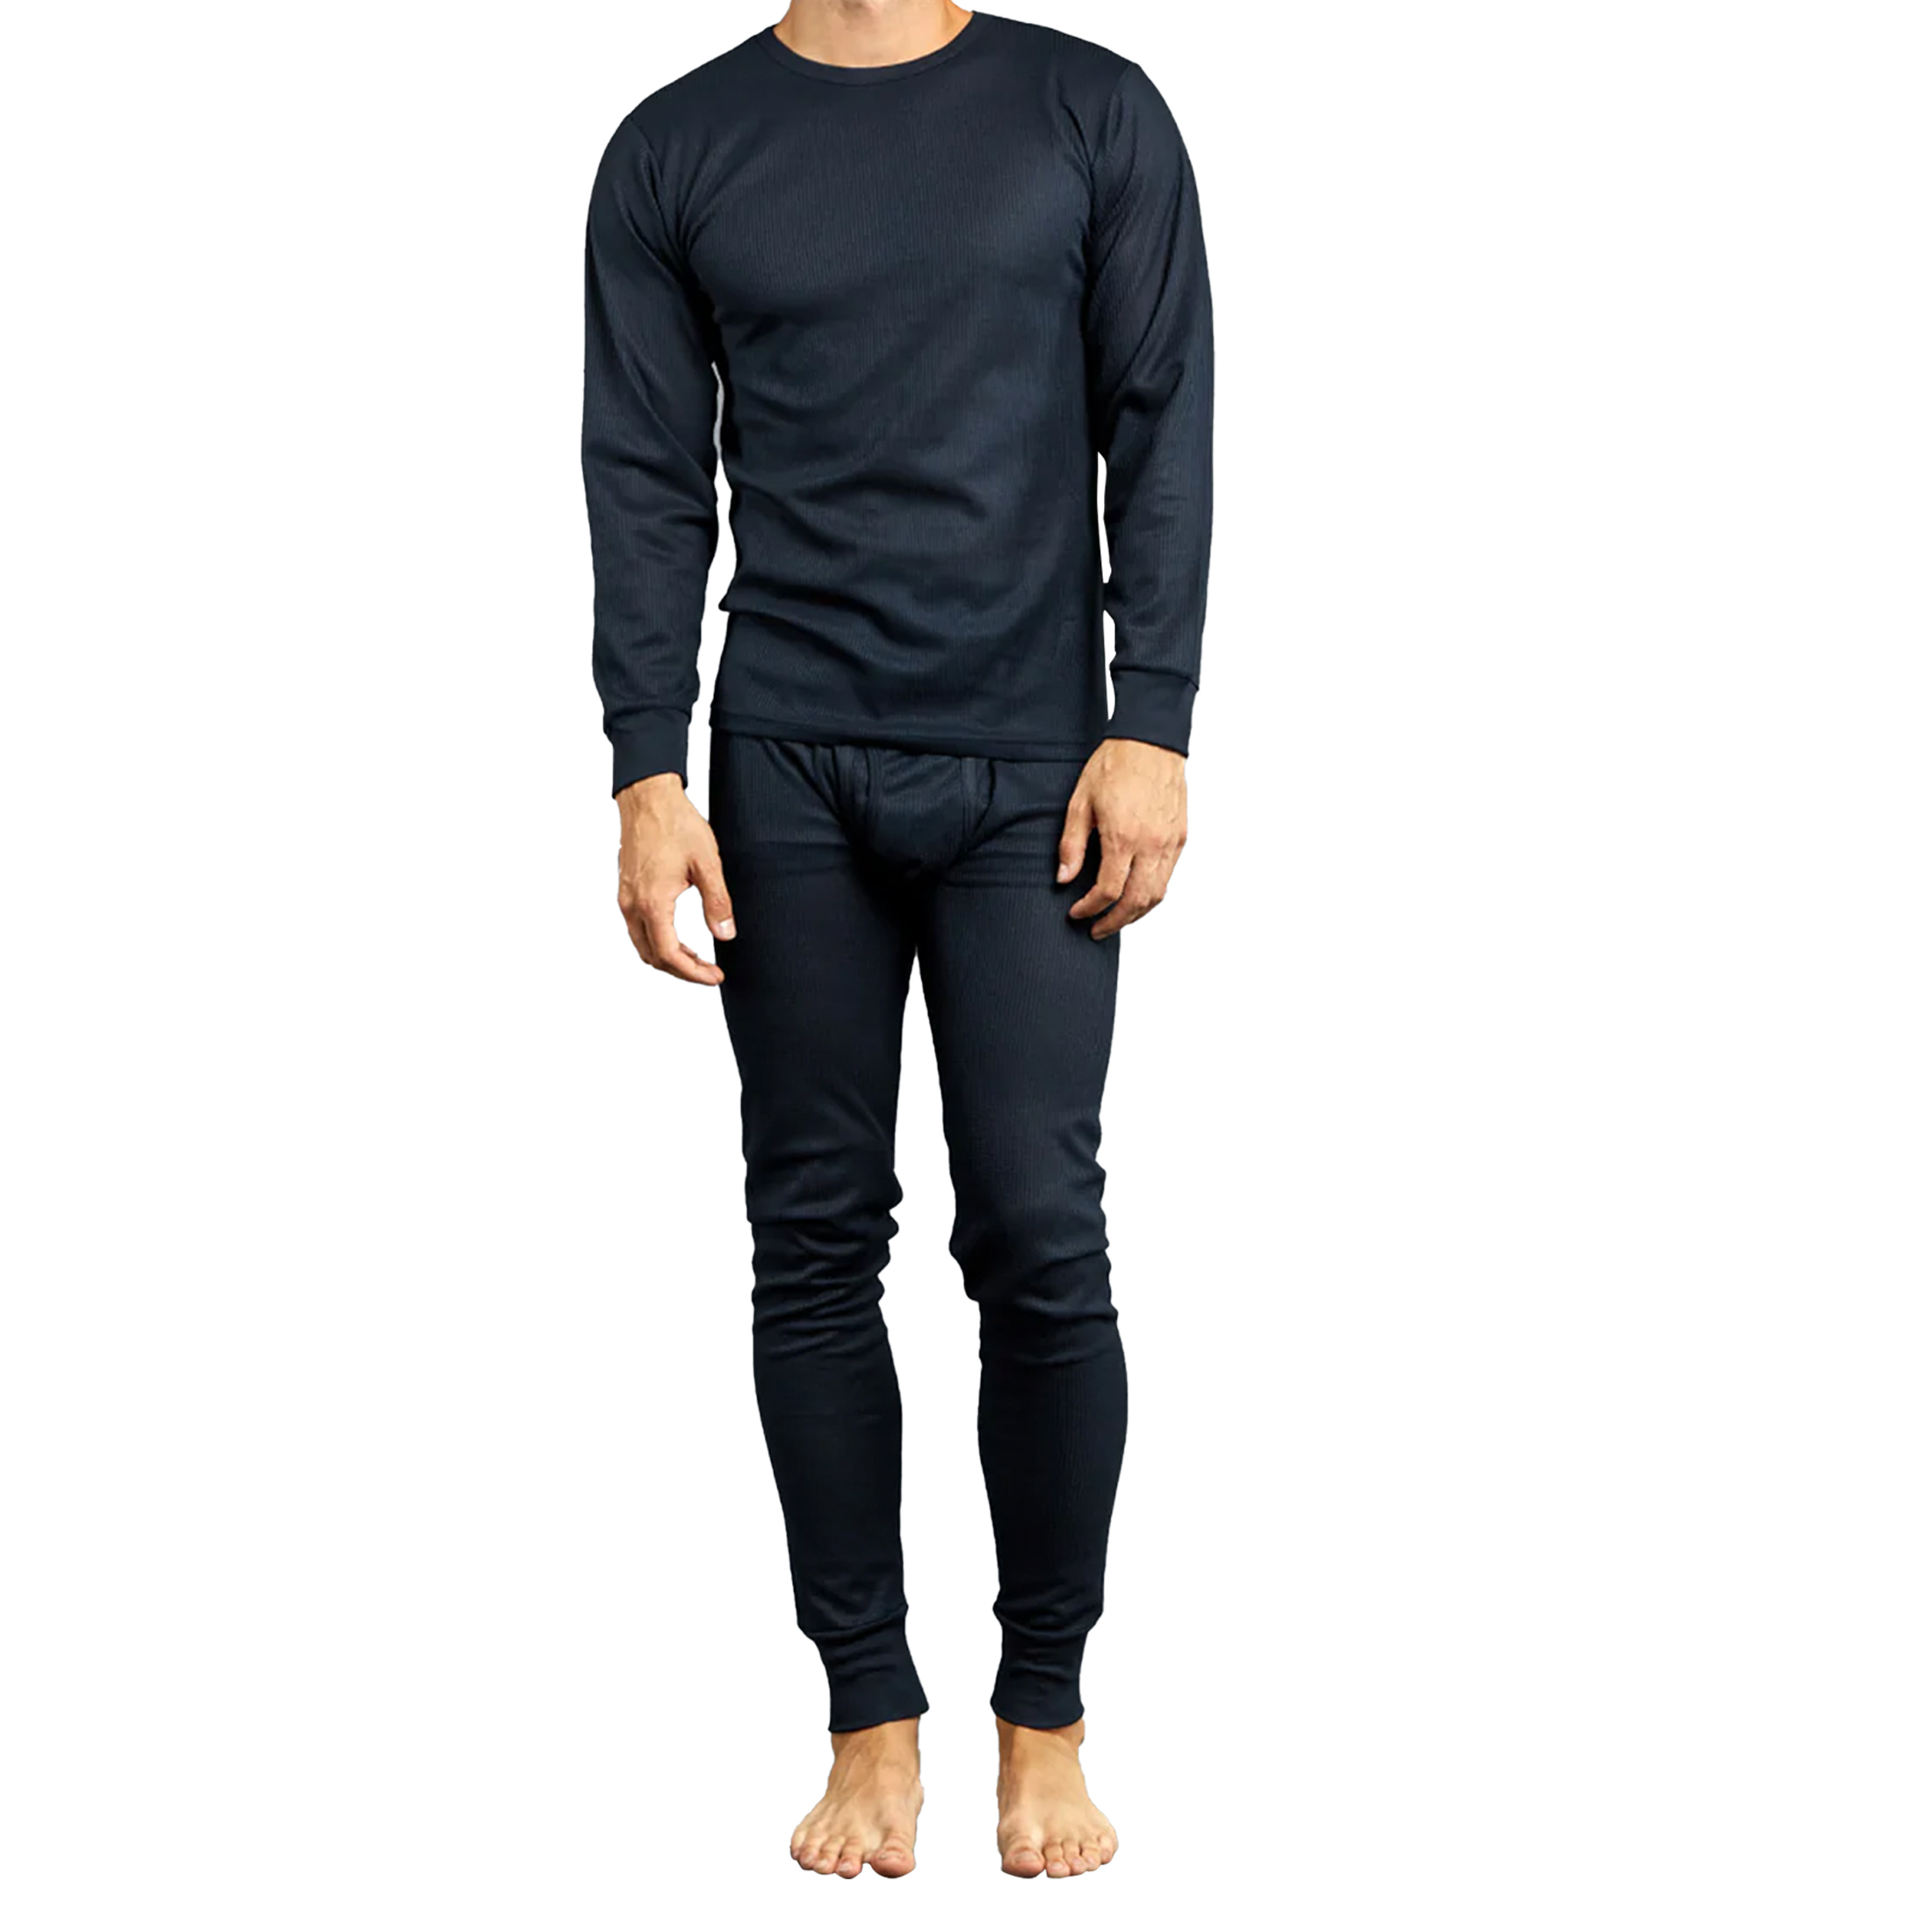 2-Piece: Men's Moisture Wicking Long Johns Base Layer Thermal Underwear Set (Top & Bottom) - Grey, X-Large